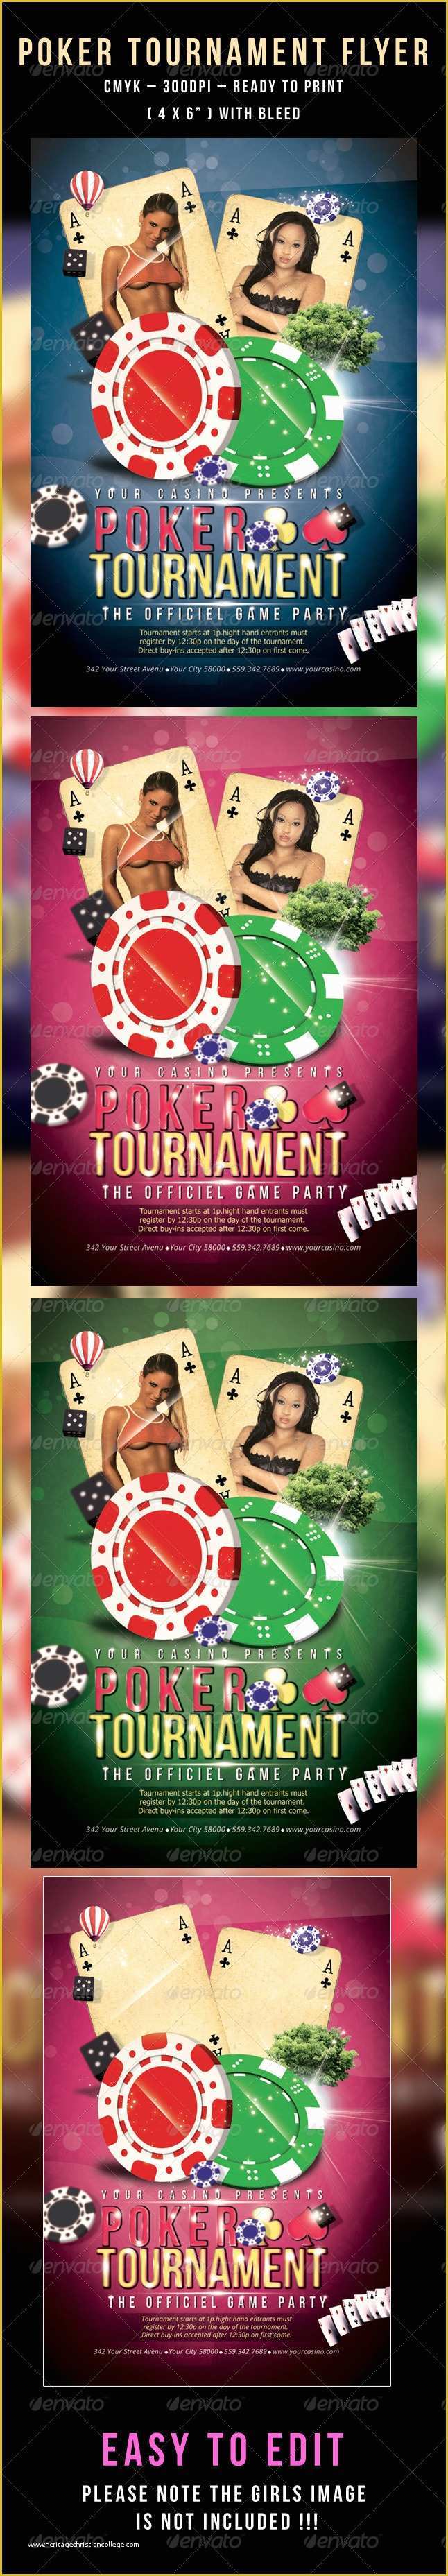 Poker tournament Flyer Template Free Of Poker tournament Flyer Templates Free Word Maydesk